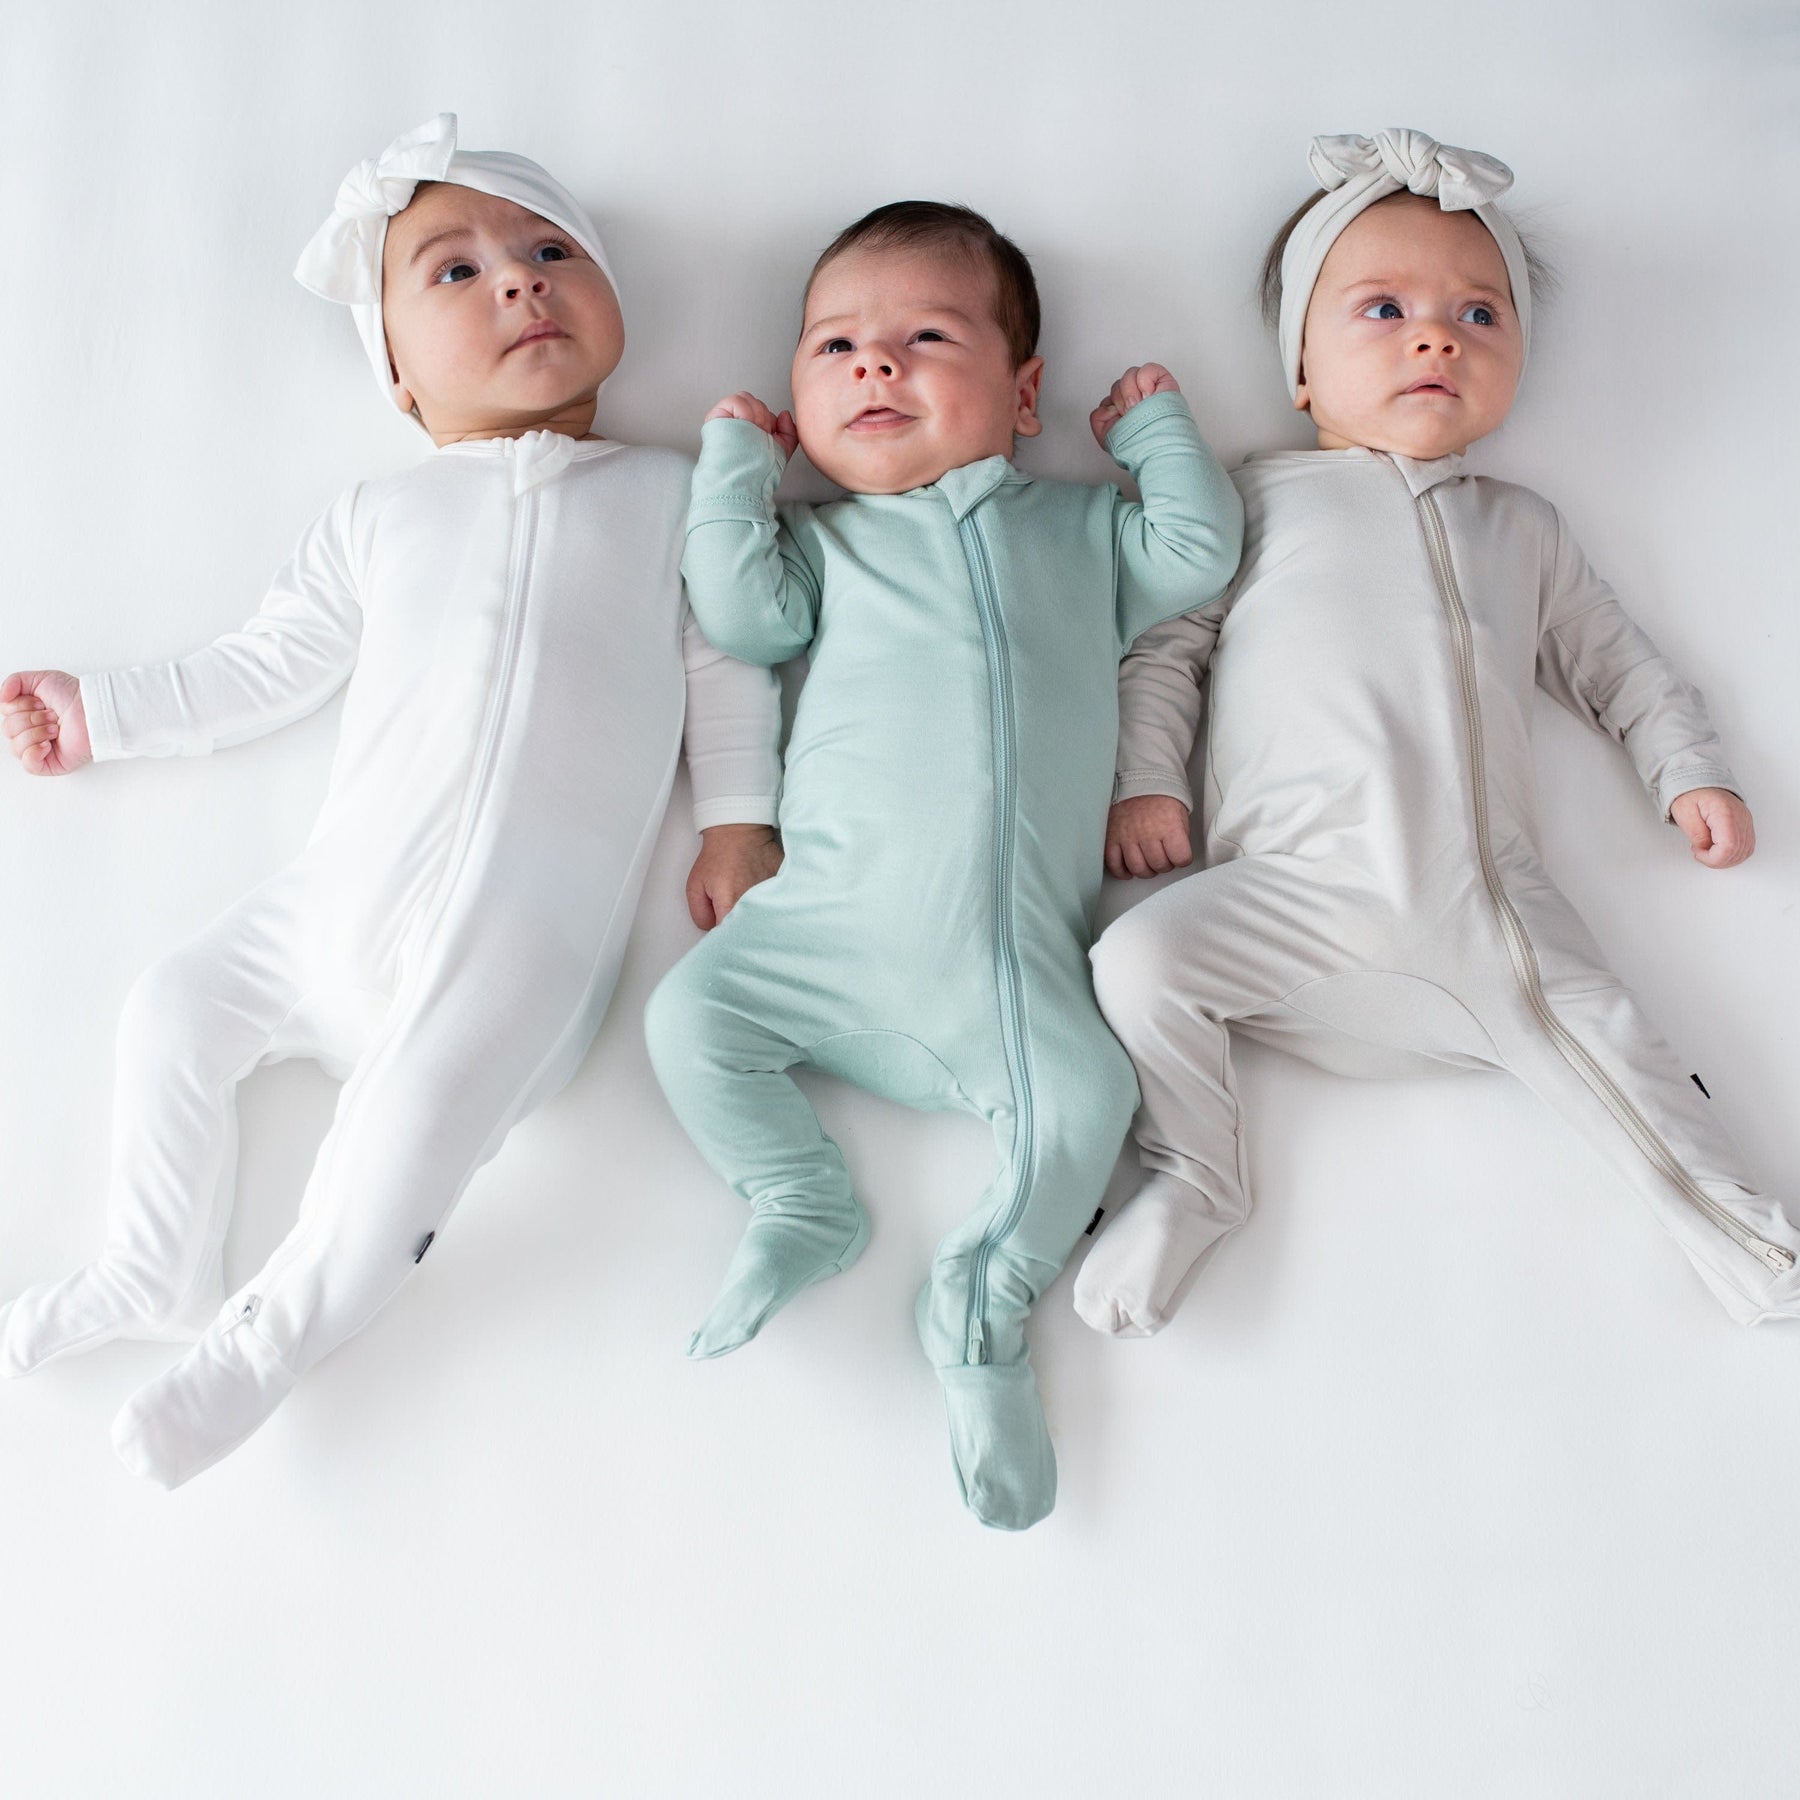 Babies wearing Kyte Baby bamboo zippered footie pajamas